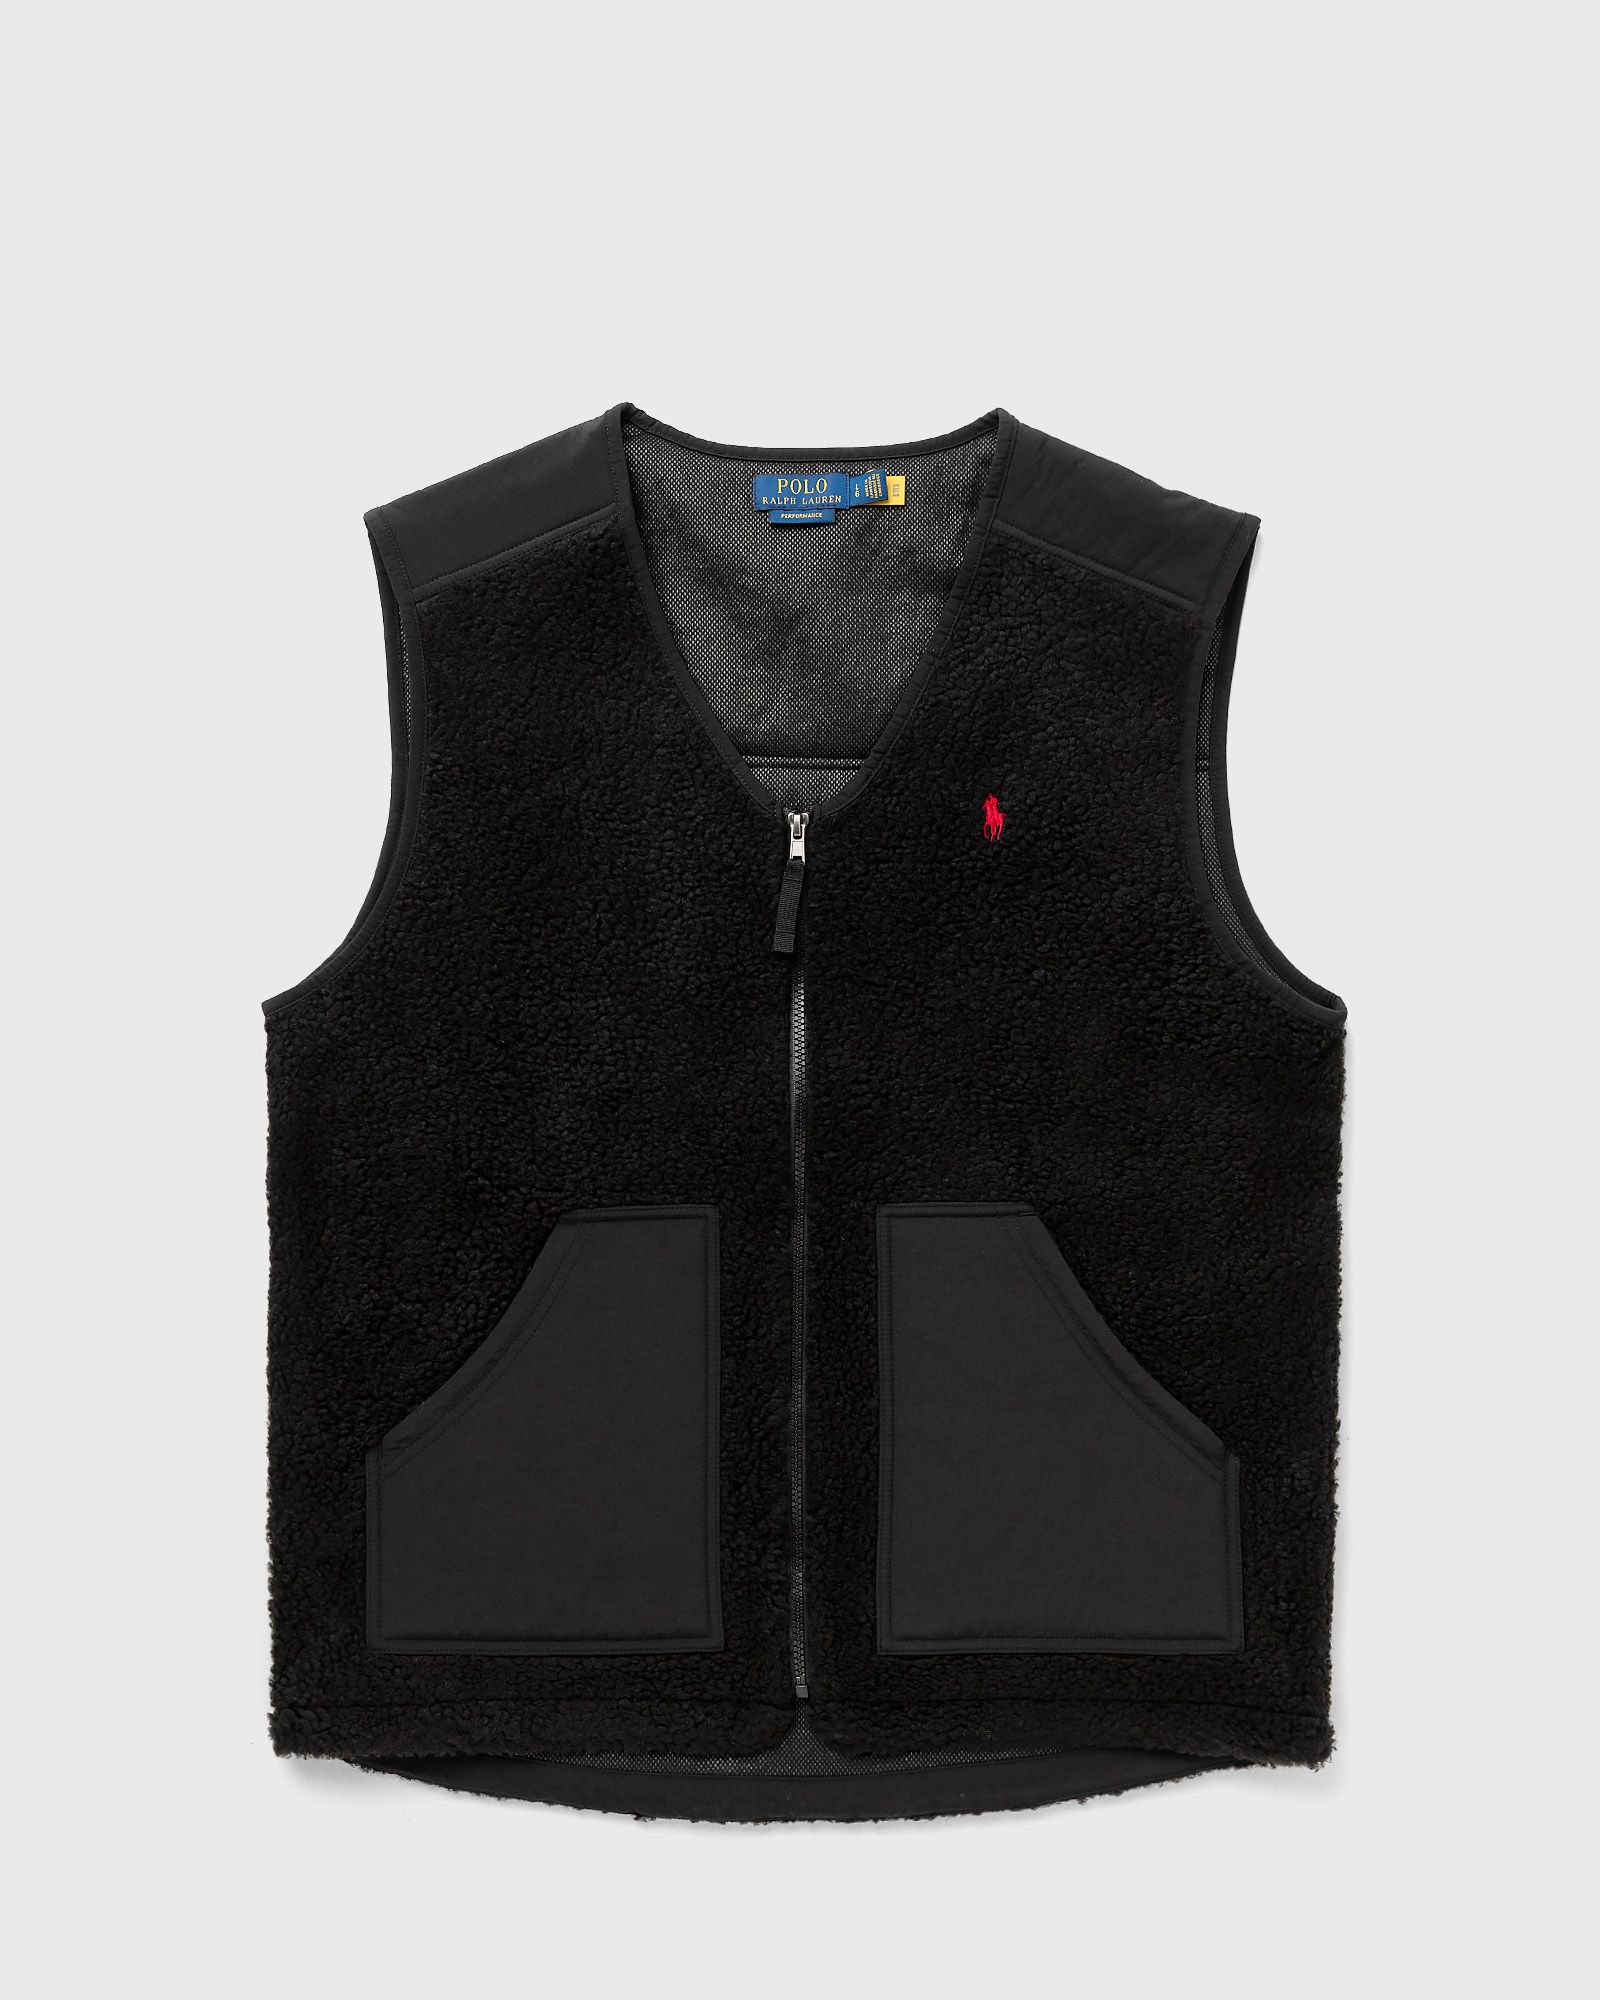 Polo Ralph Lauren - vest men vests black in größe:xl